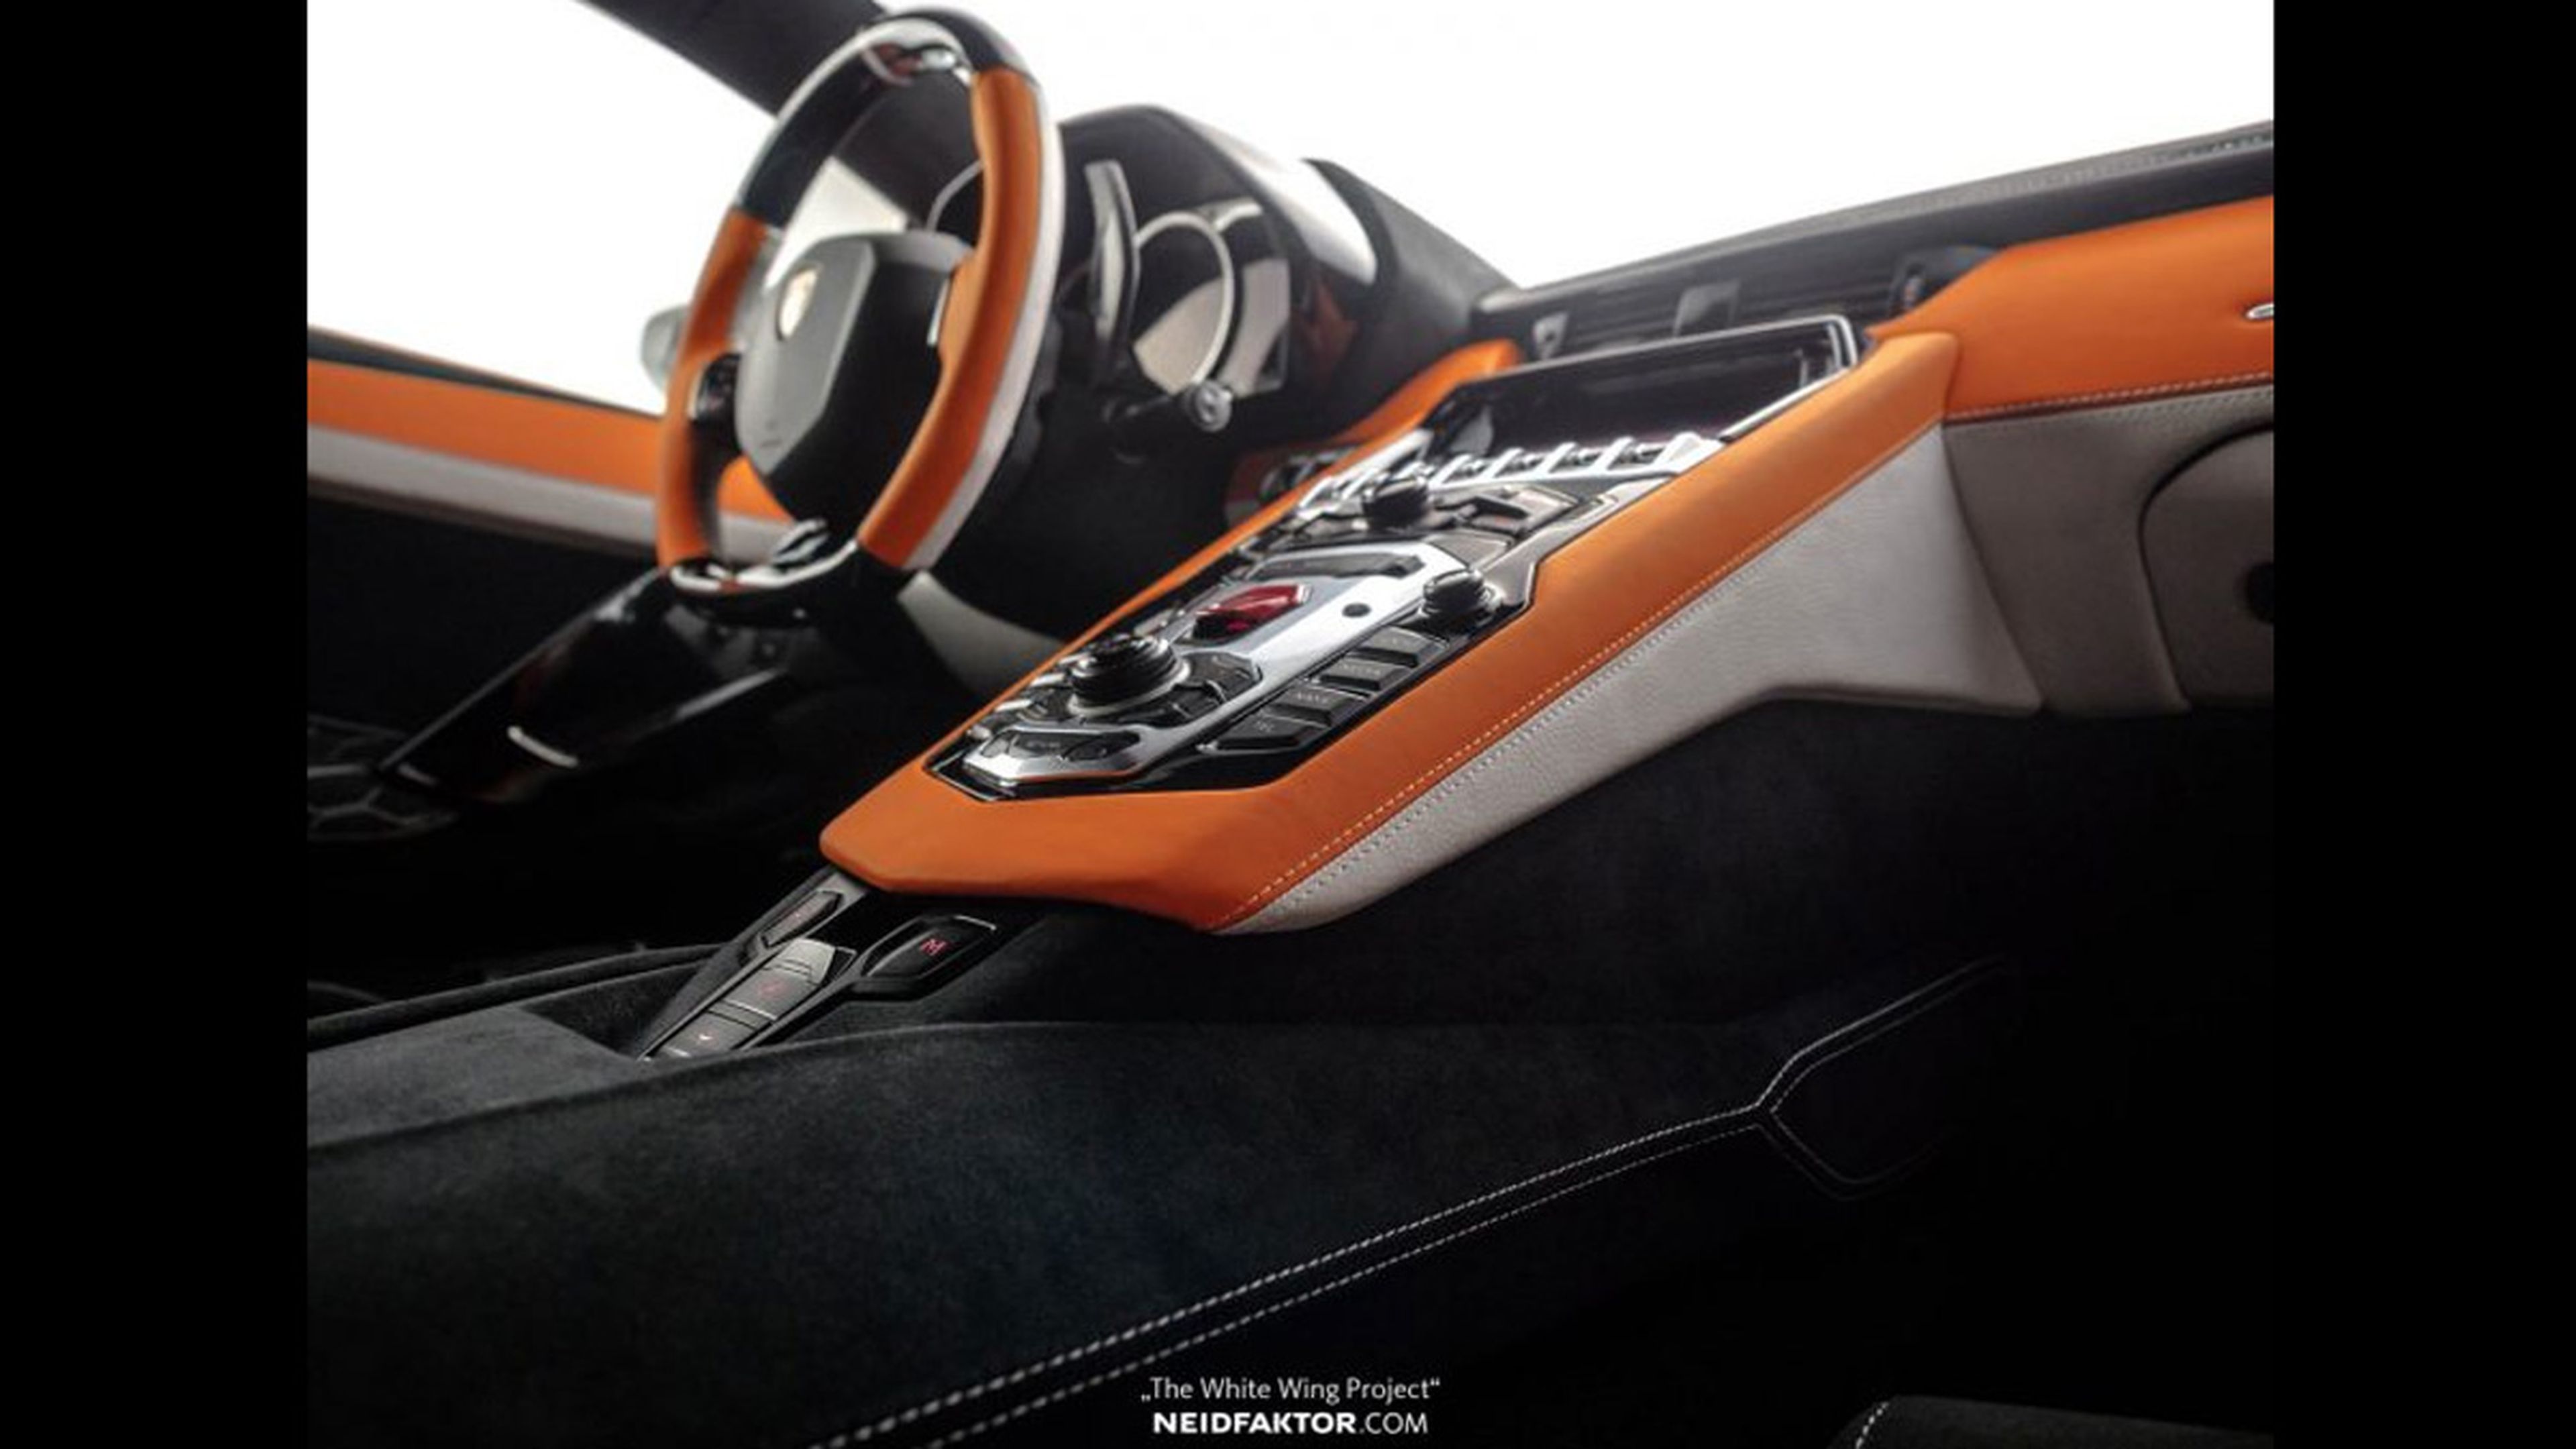 Lamborghini Aventador Neidfaktor